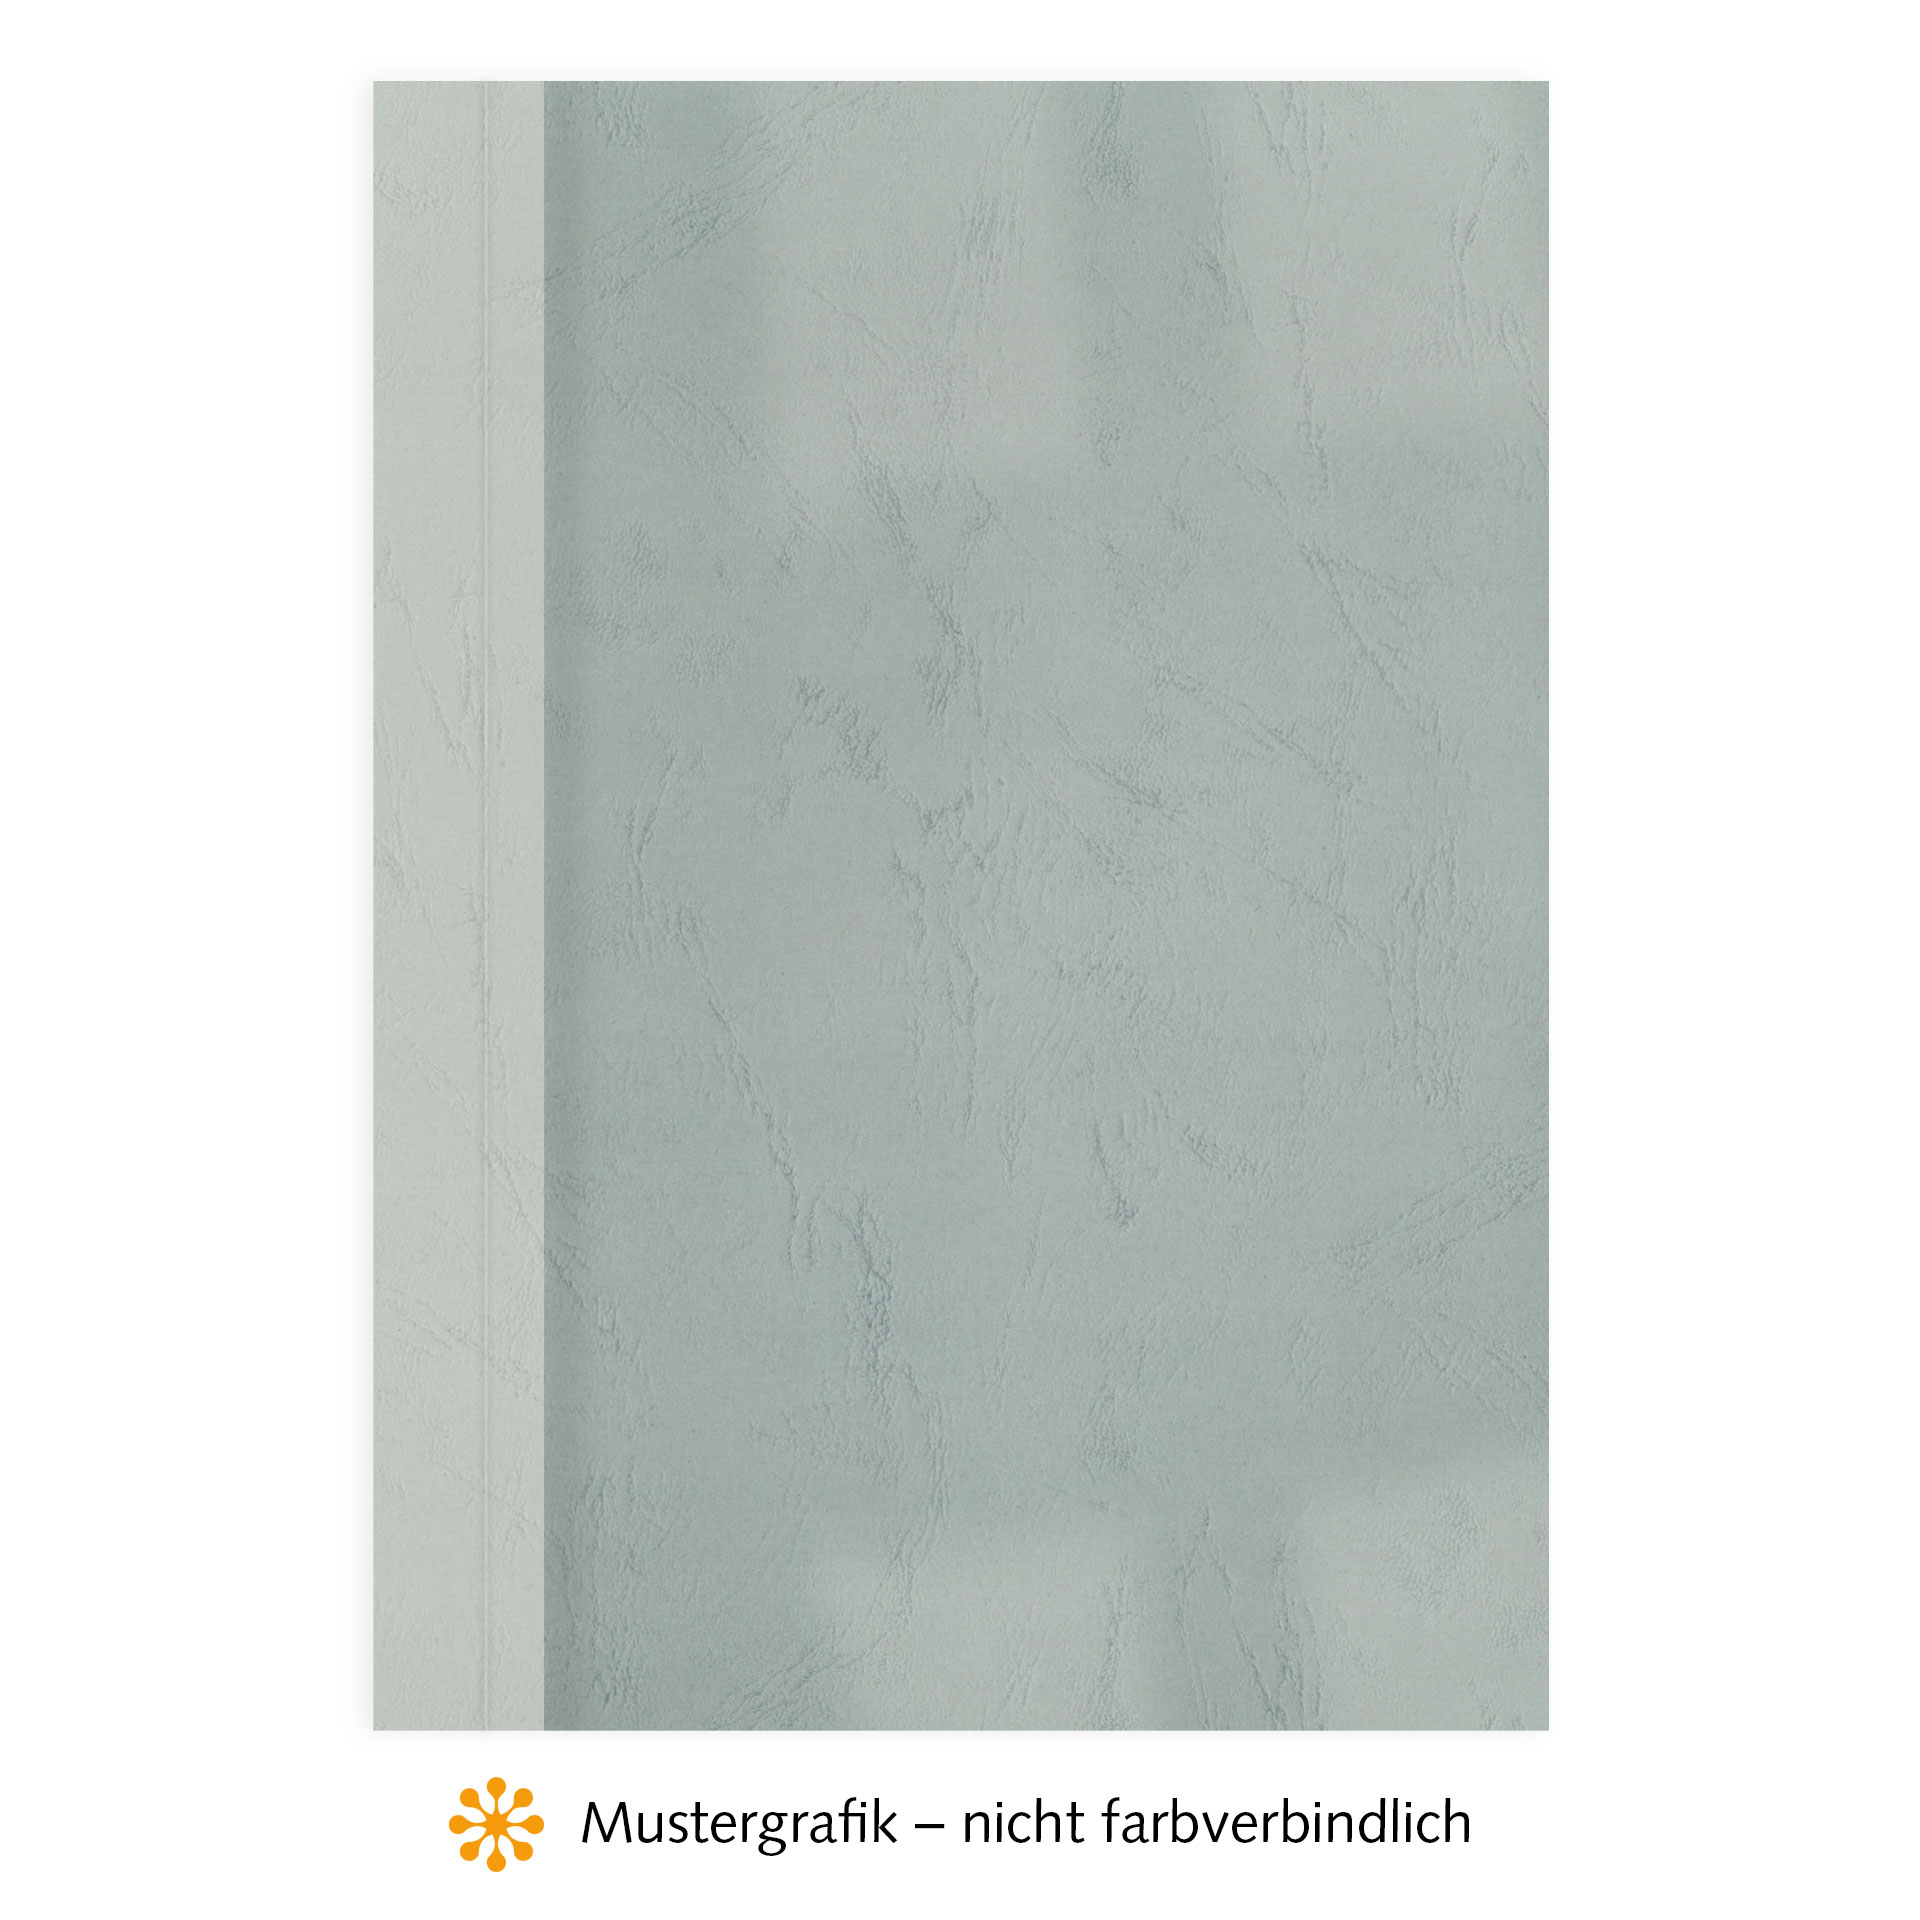 Ösenmappen DUO Cover, Vorderseite Folie KLAR transparent, Rückseite Karton Leder, Silbergrau / Hellgrau, 7 mm, 61 bis 70 Blatt